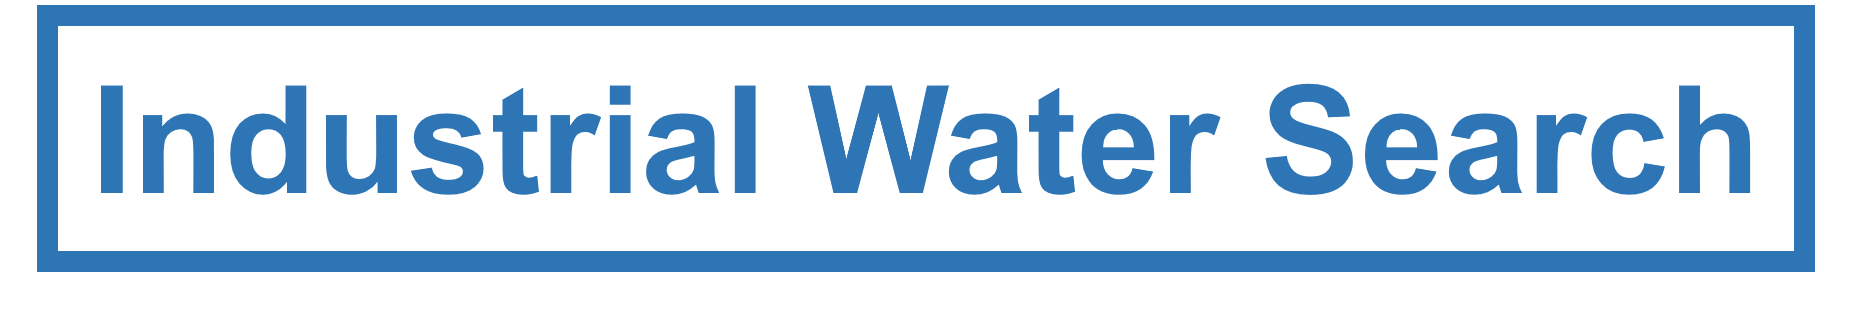 Industrial Water Search - Google Customer Search Engine Focused on Industrial Water Websites